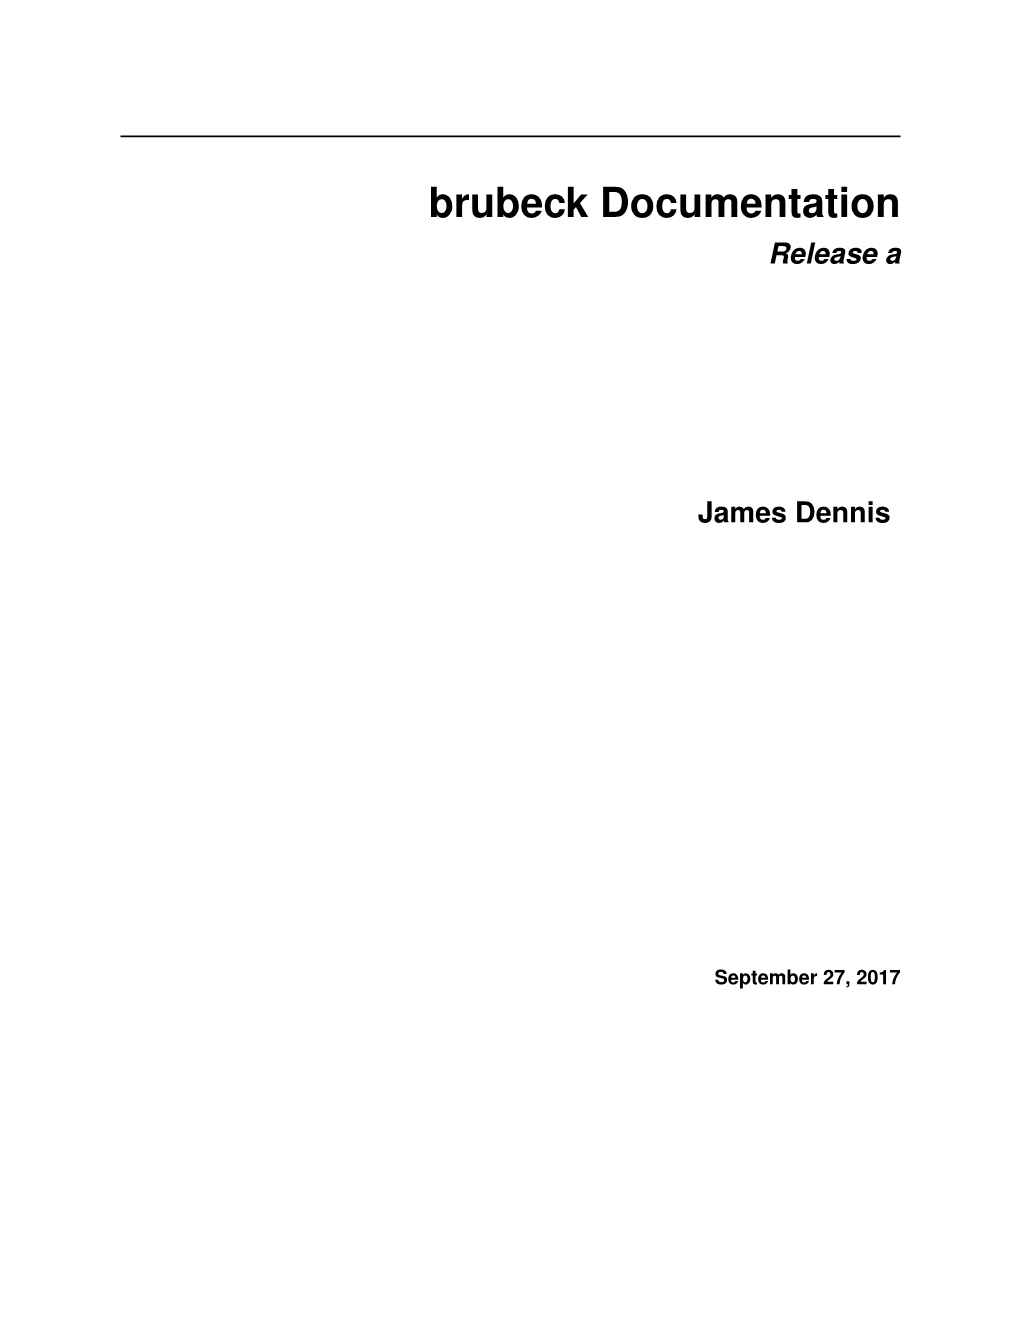 Brubeck Documentation Release A